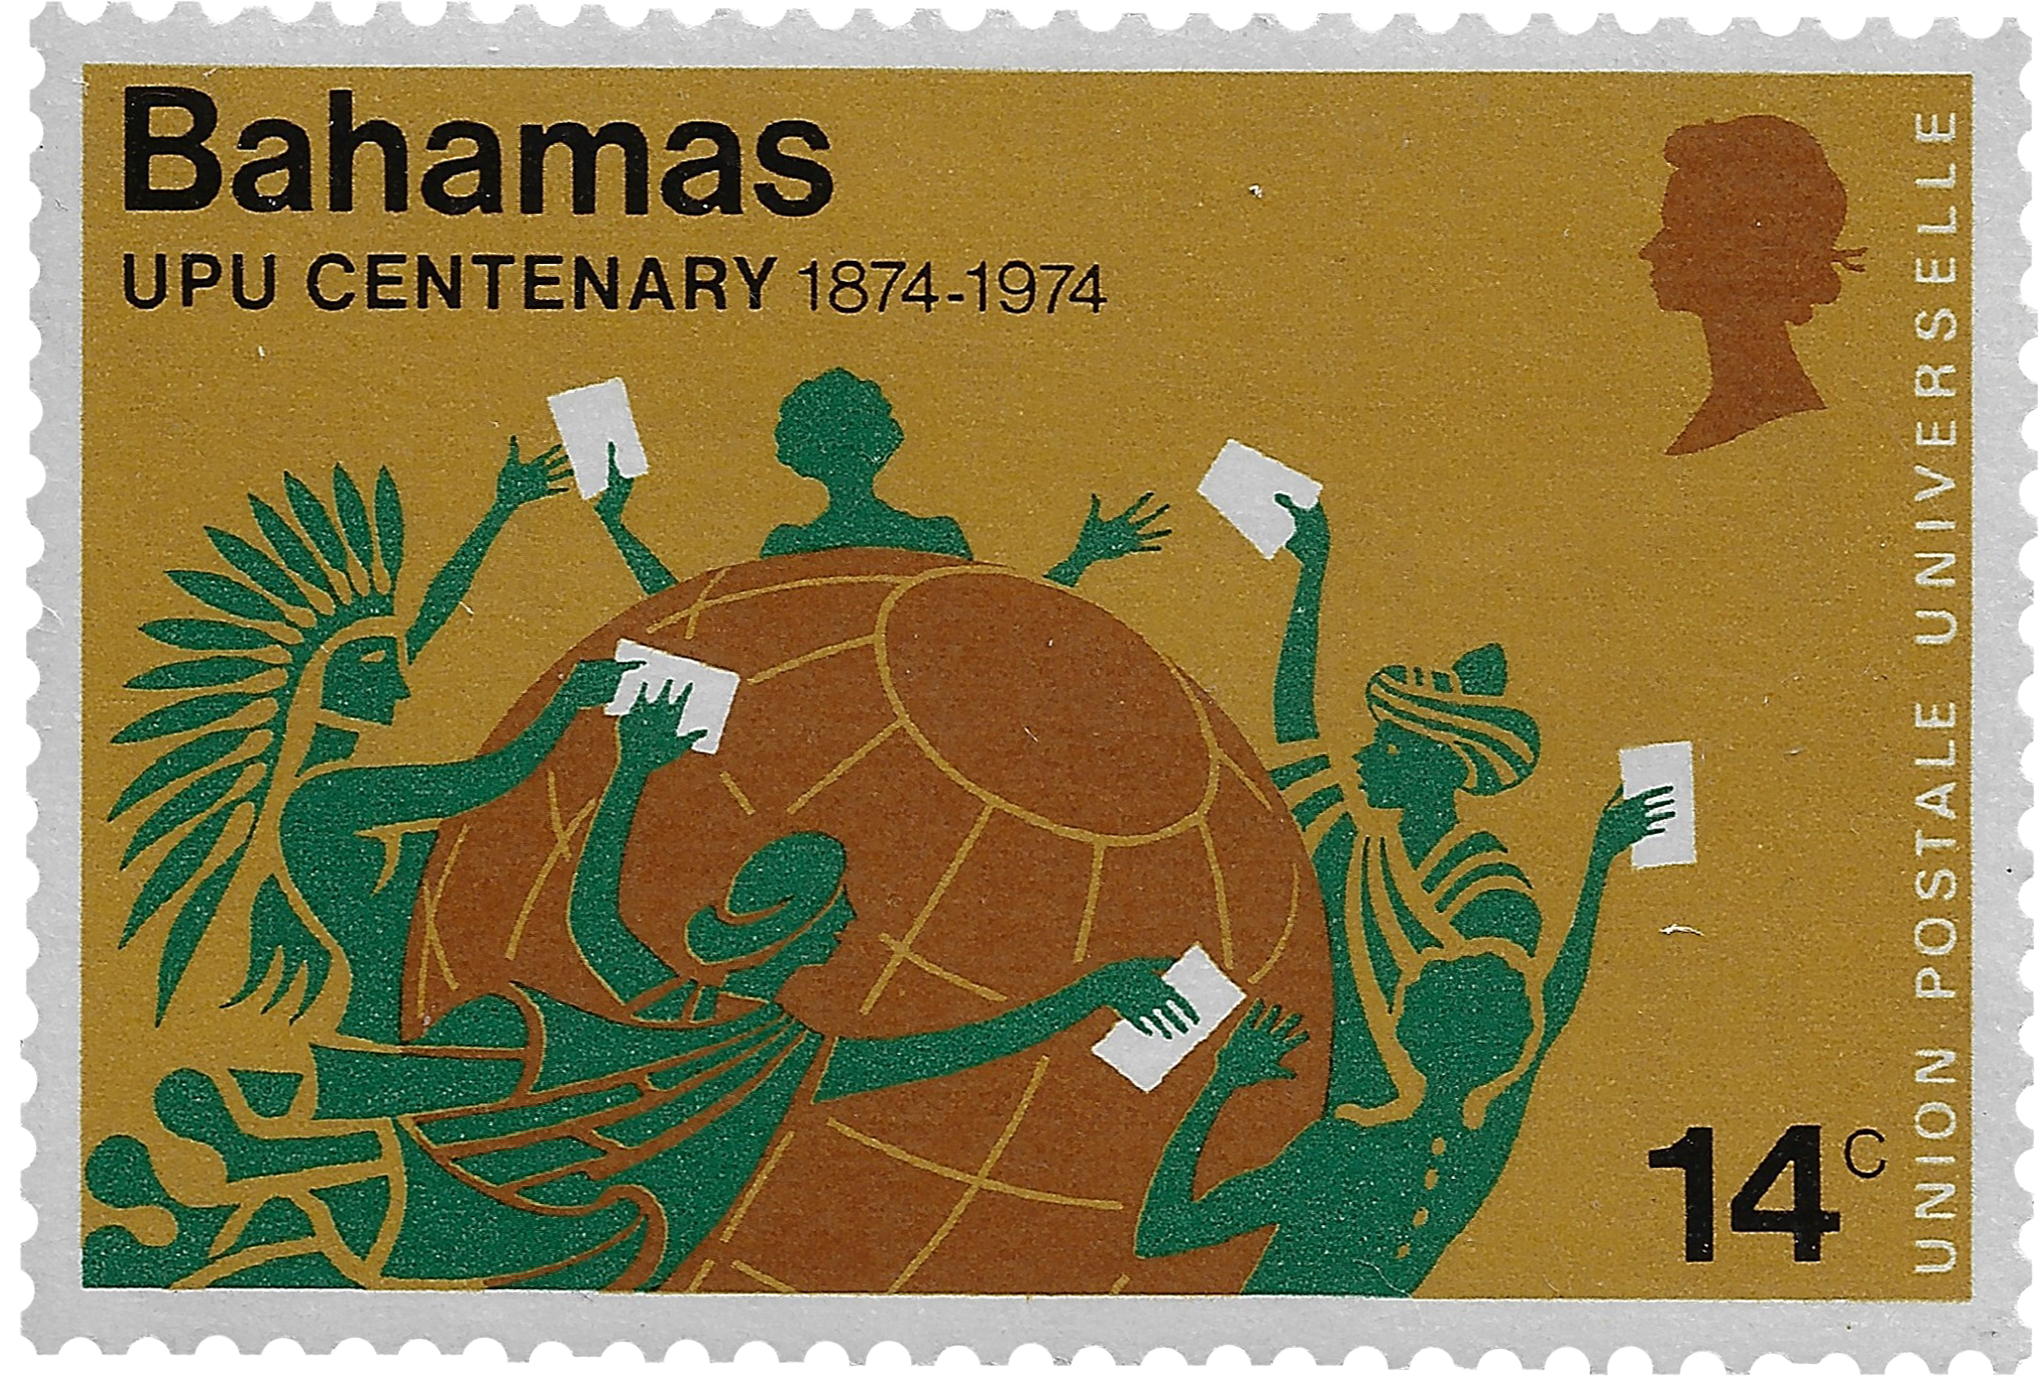 14c 1974, UPU Centenary 1874-1974, Union Postale Universelle